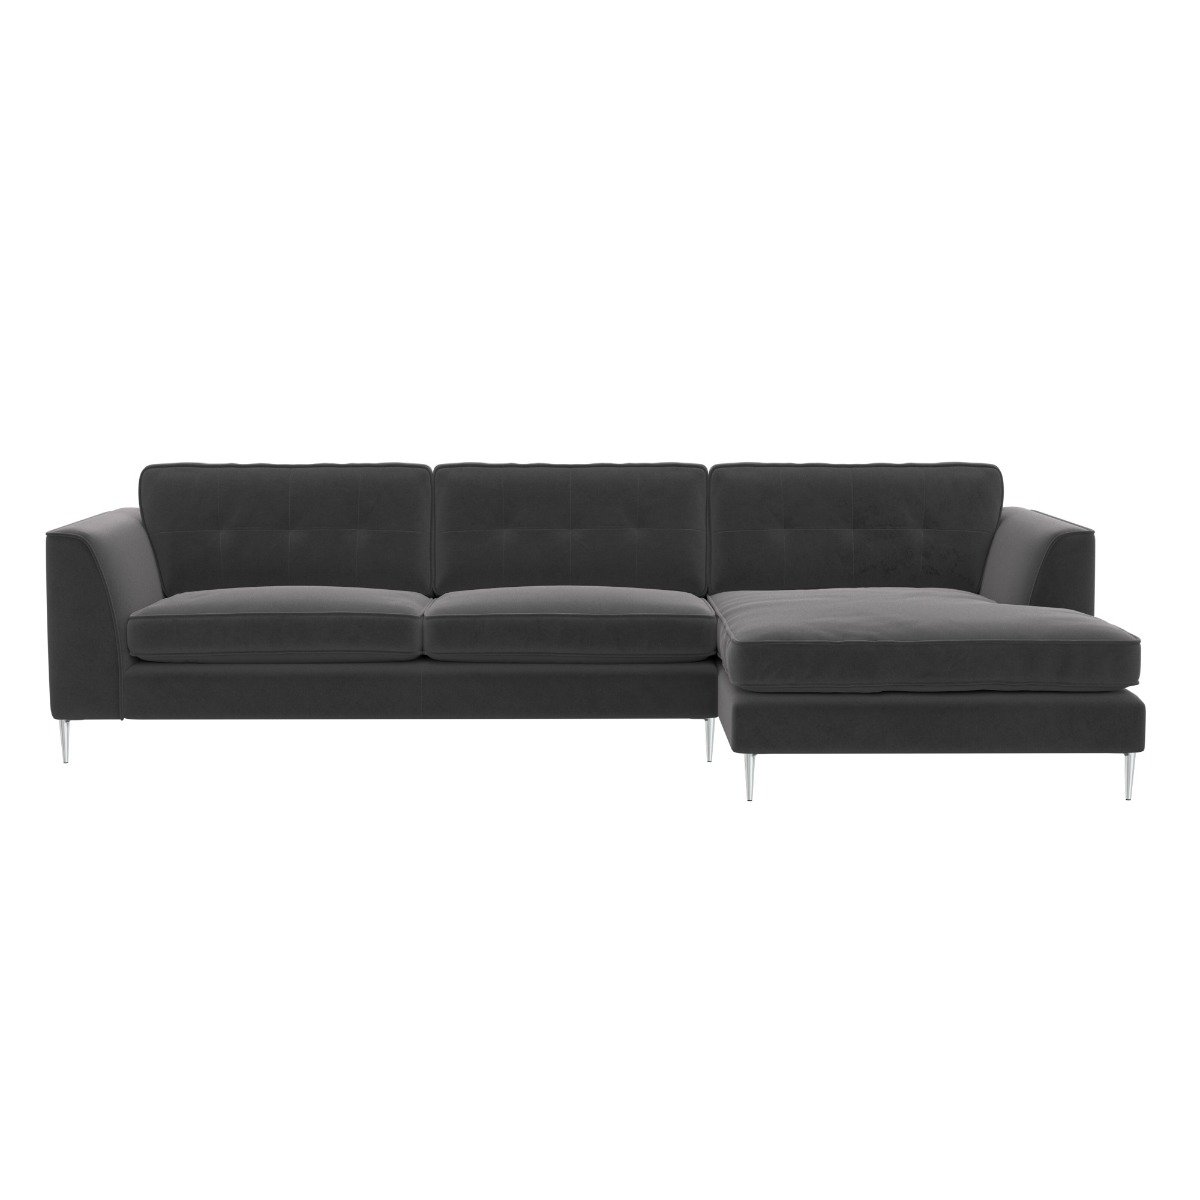 Conza Large Chaise Corner Sofa Right, Black Fabric | Barker & Stonehouse